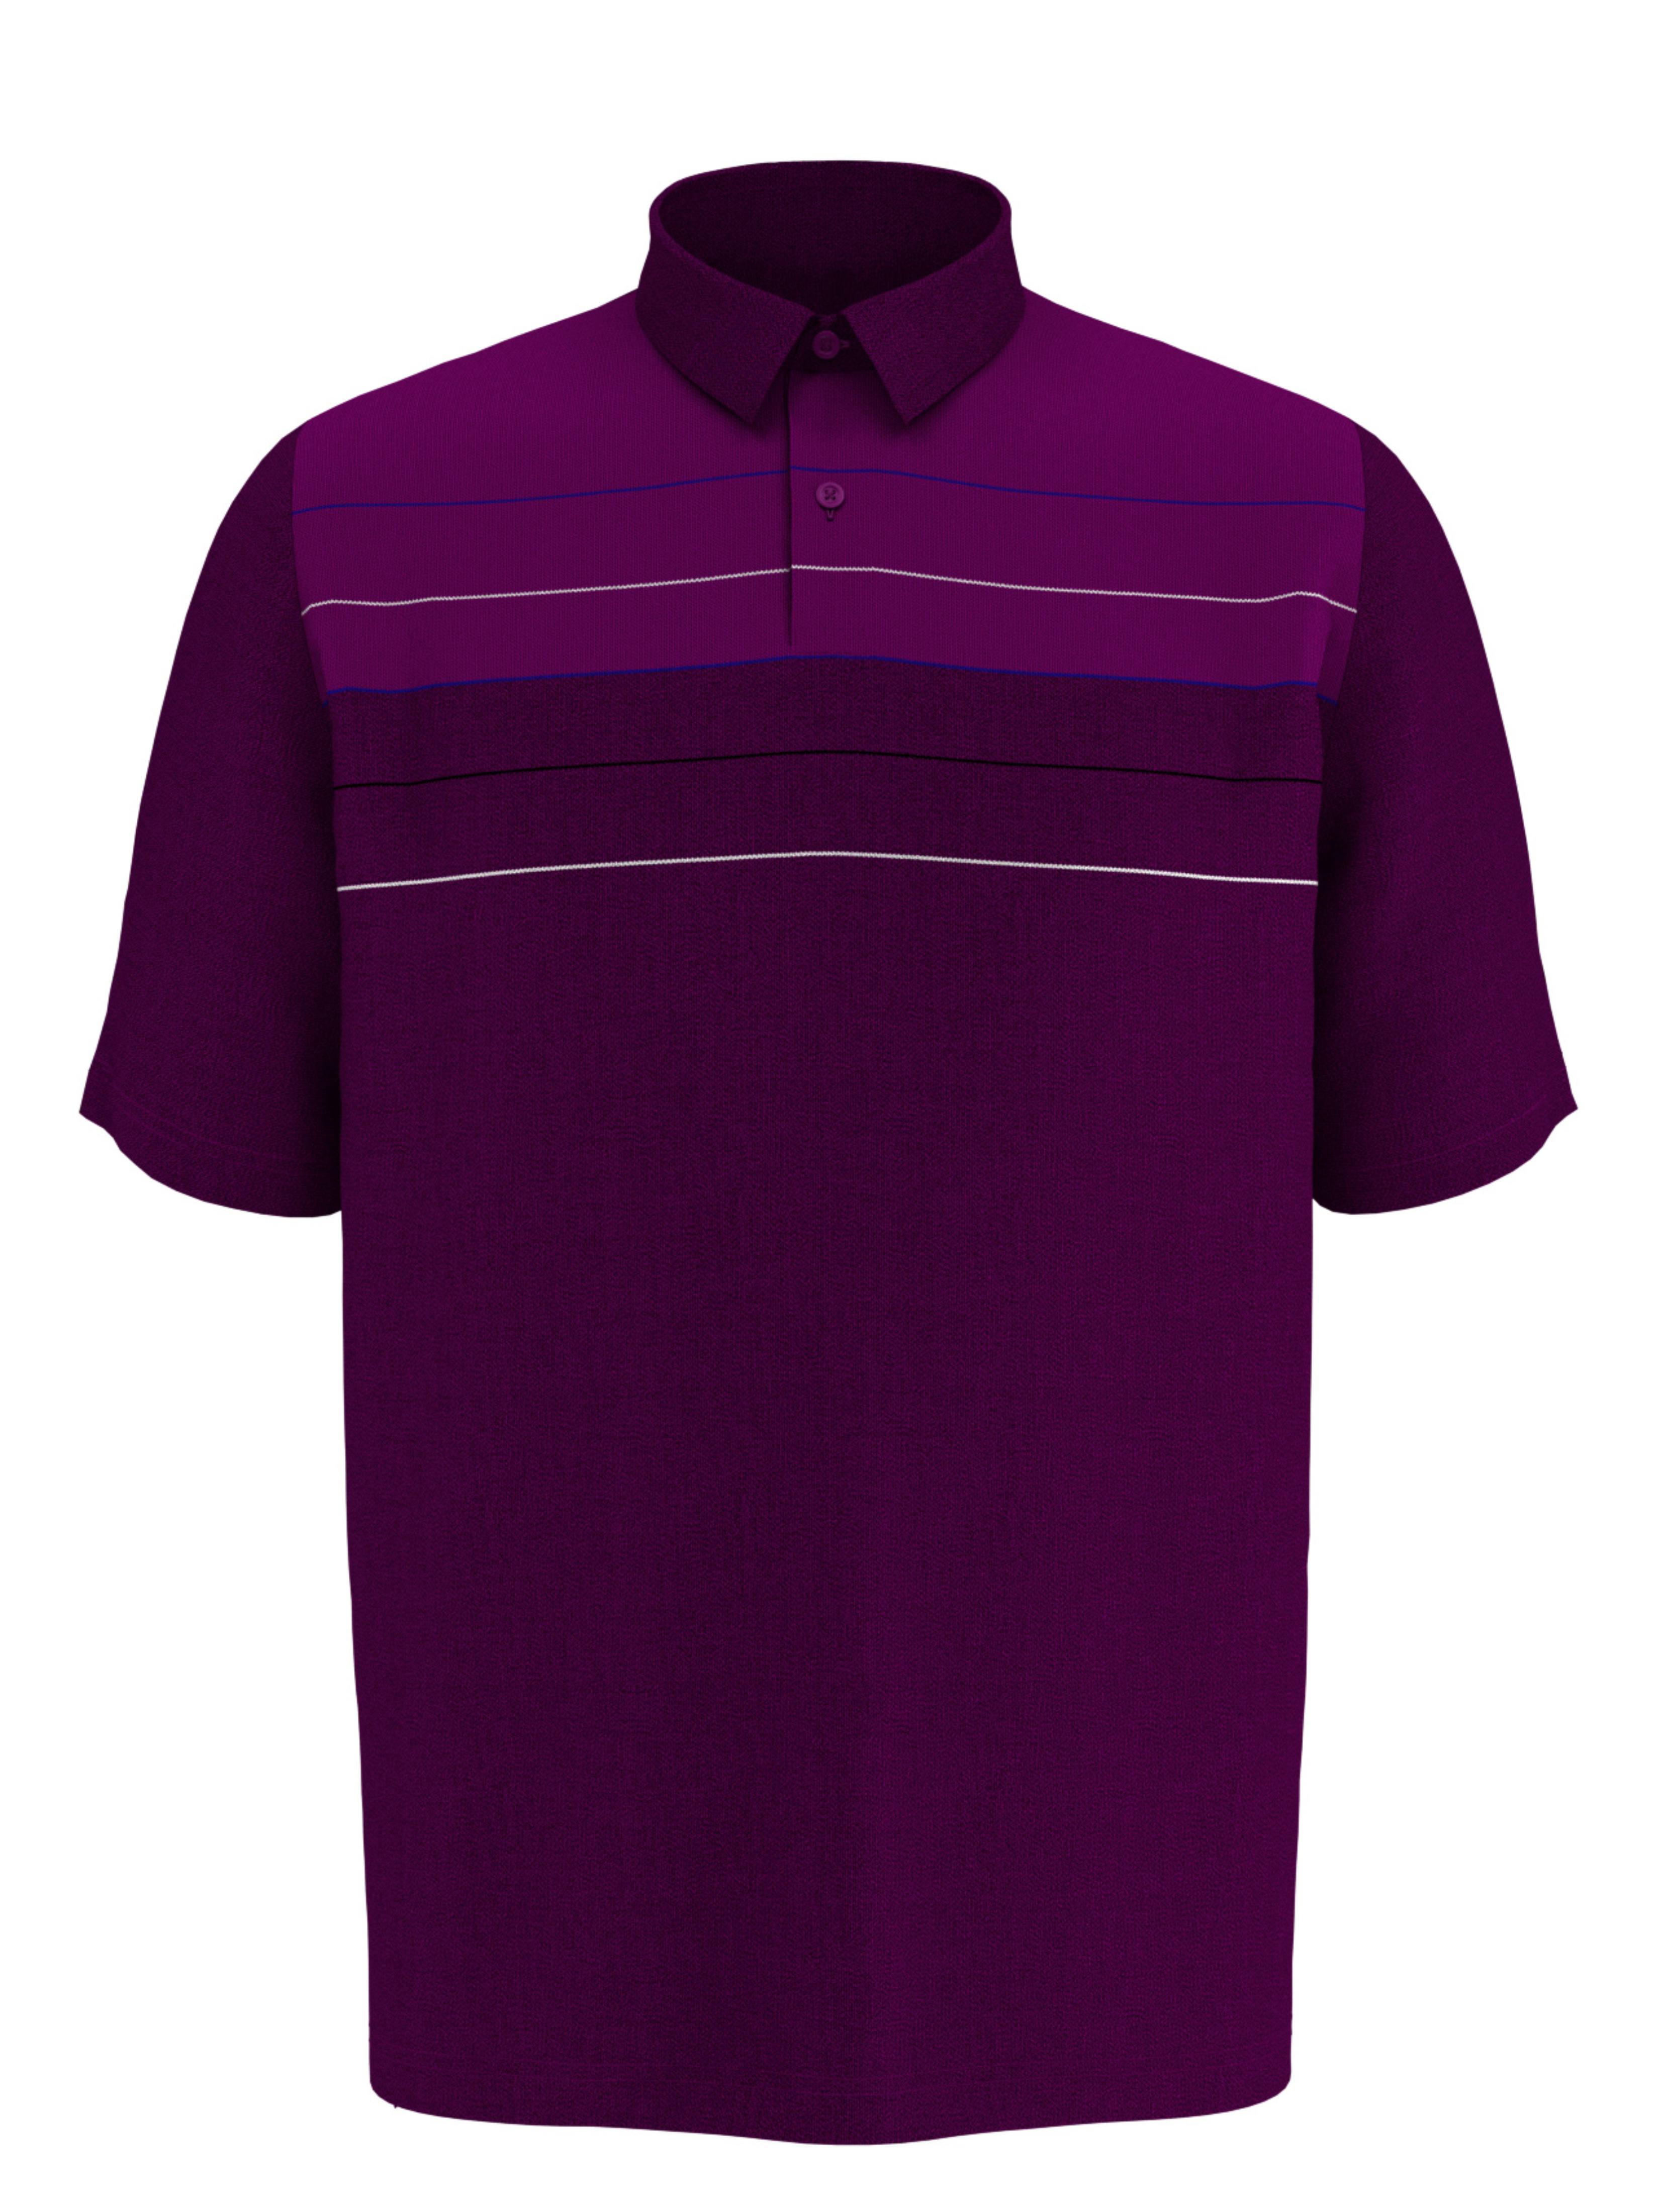 Callaway Apparel Mens Big & Tall Jaspe Color Block Golf Polo Shirt, Size 4XLT, Dark Purple, Polyester/Recycled Polyester/Elastane | Golf Apparel Shop